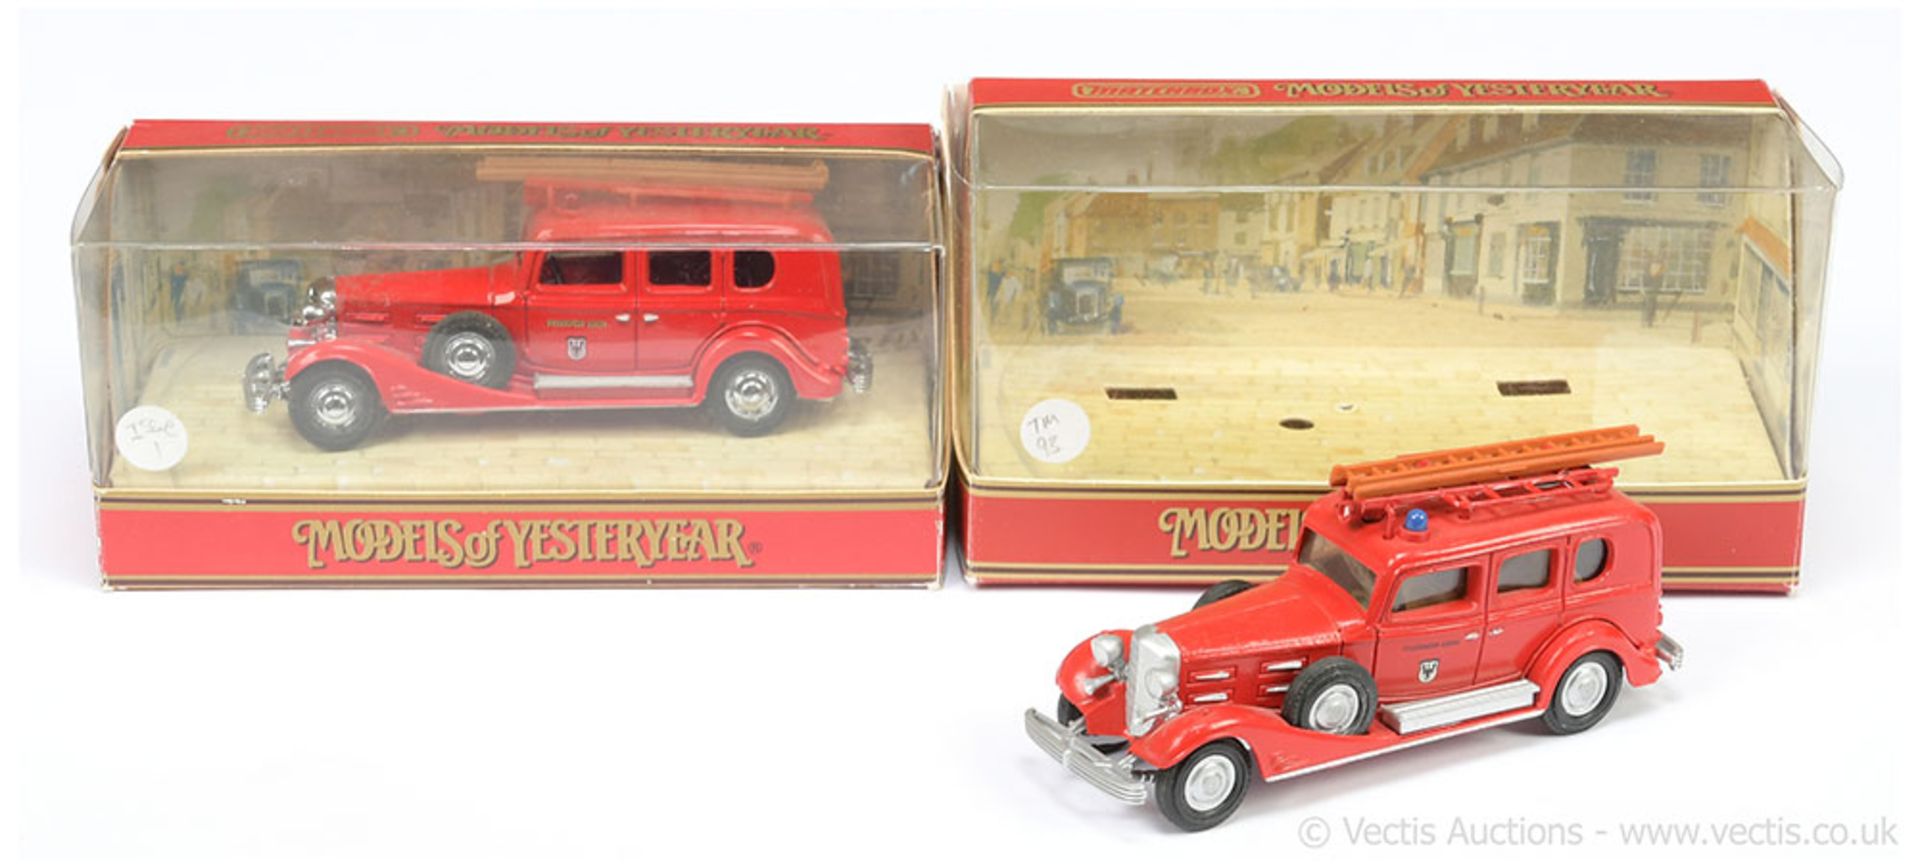 Matchbox Models of Yesteryear 2 x Y61 1933 Cadillac Fire Engine